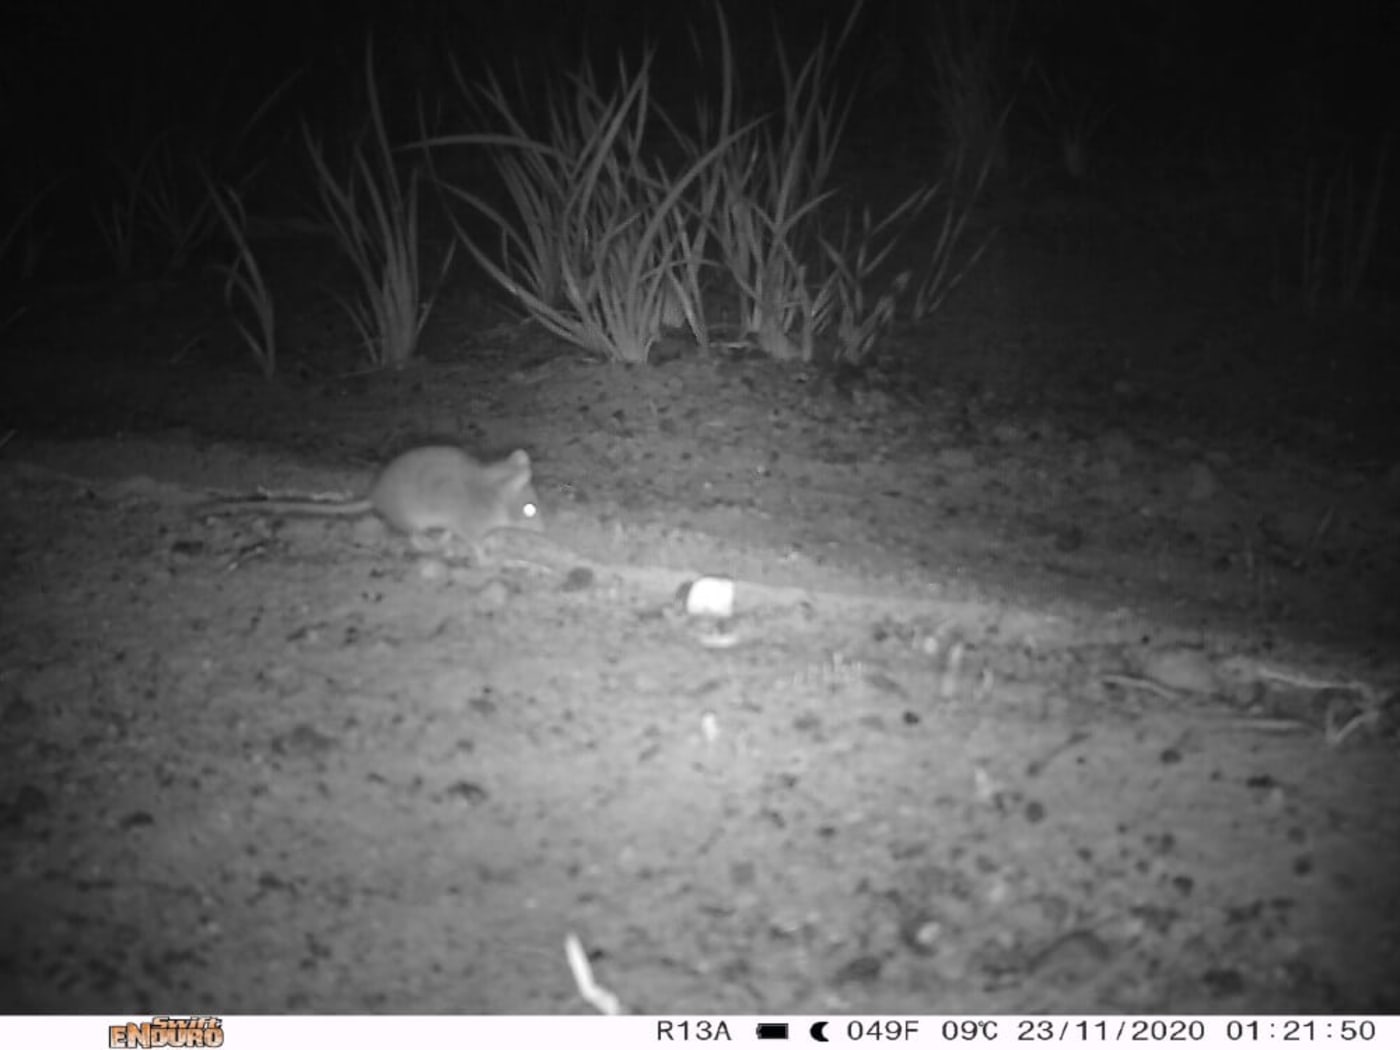 Sensor camera image of Kangaroo Island dunnart